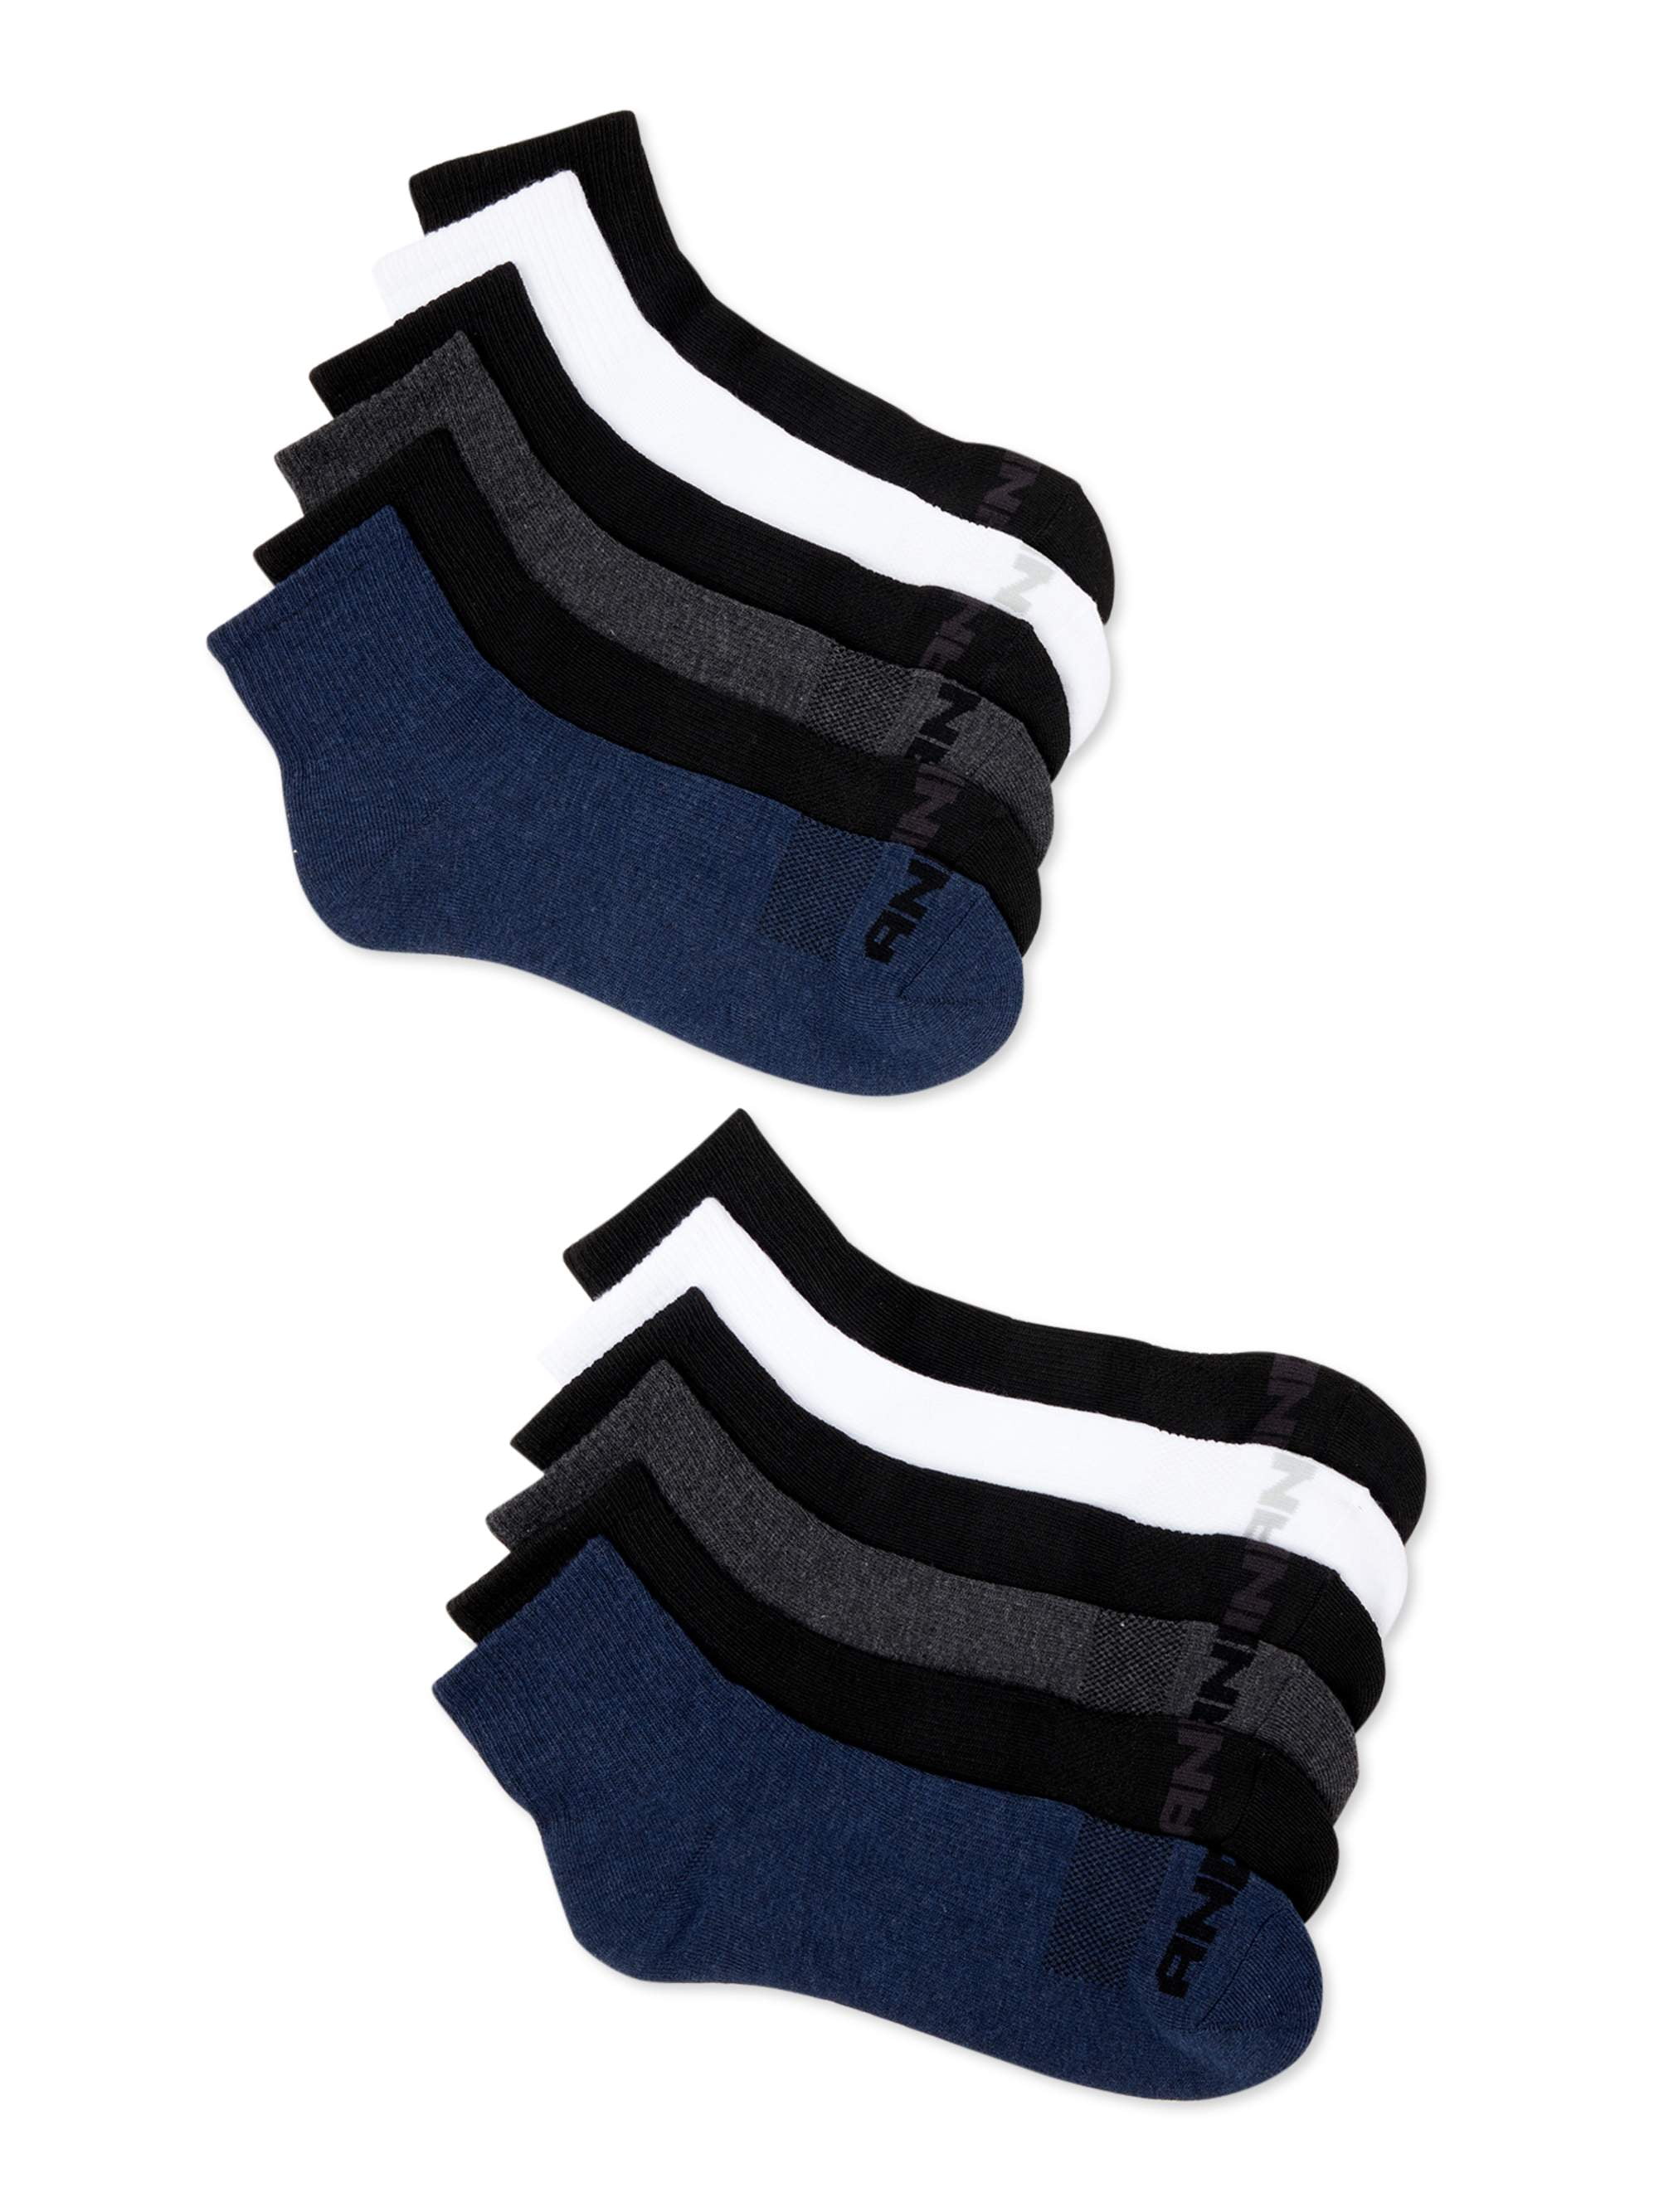 AND1 Men's Cushion Quarter Sock, 12 Pack - Walmart.com